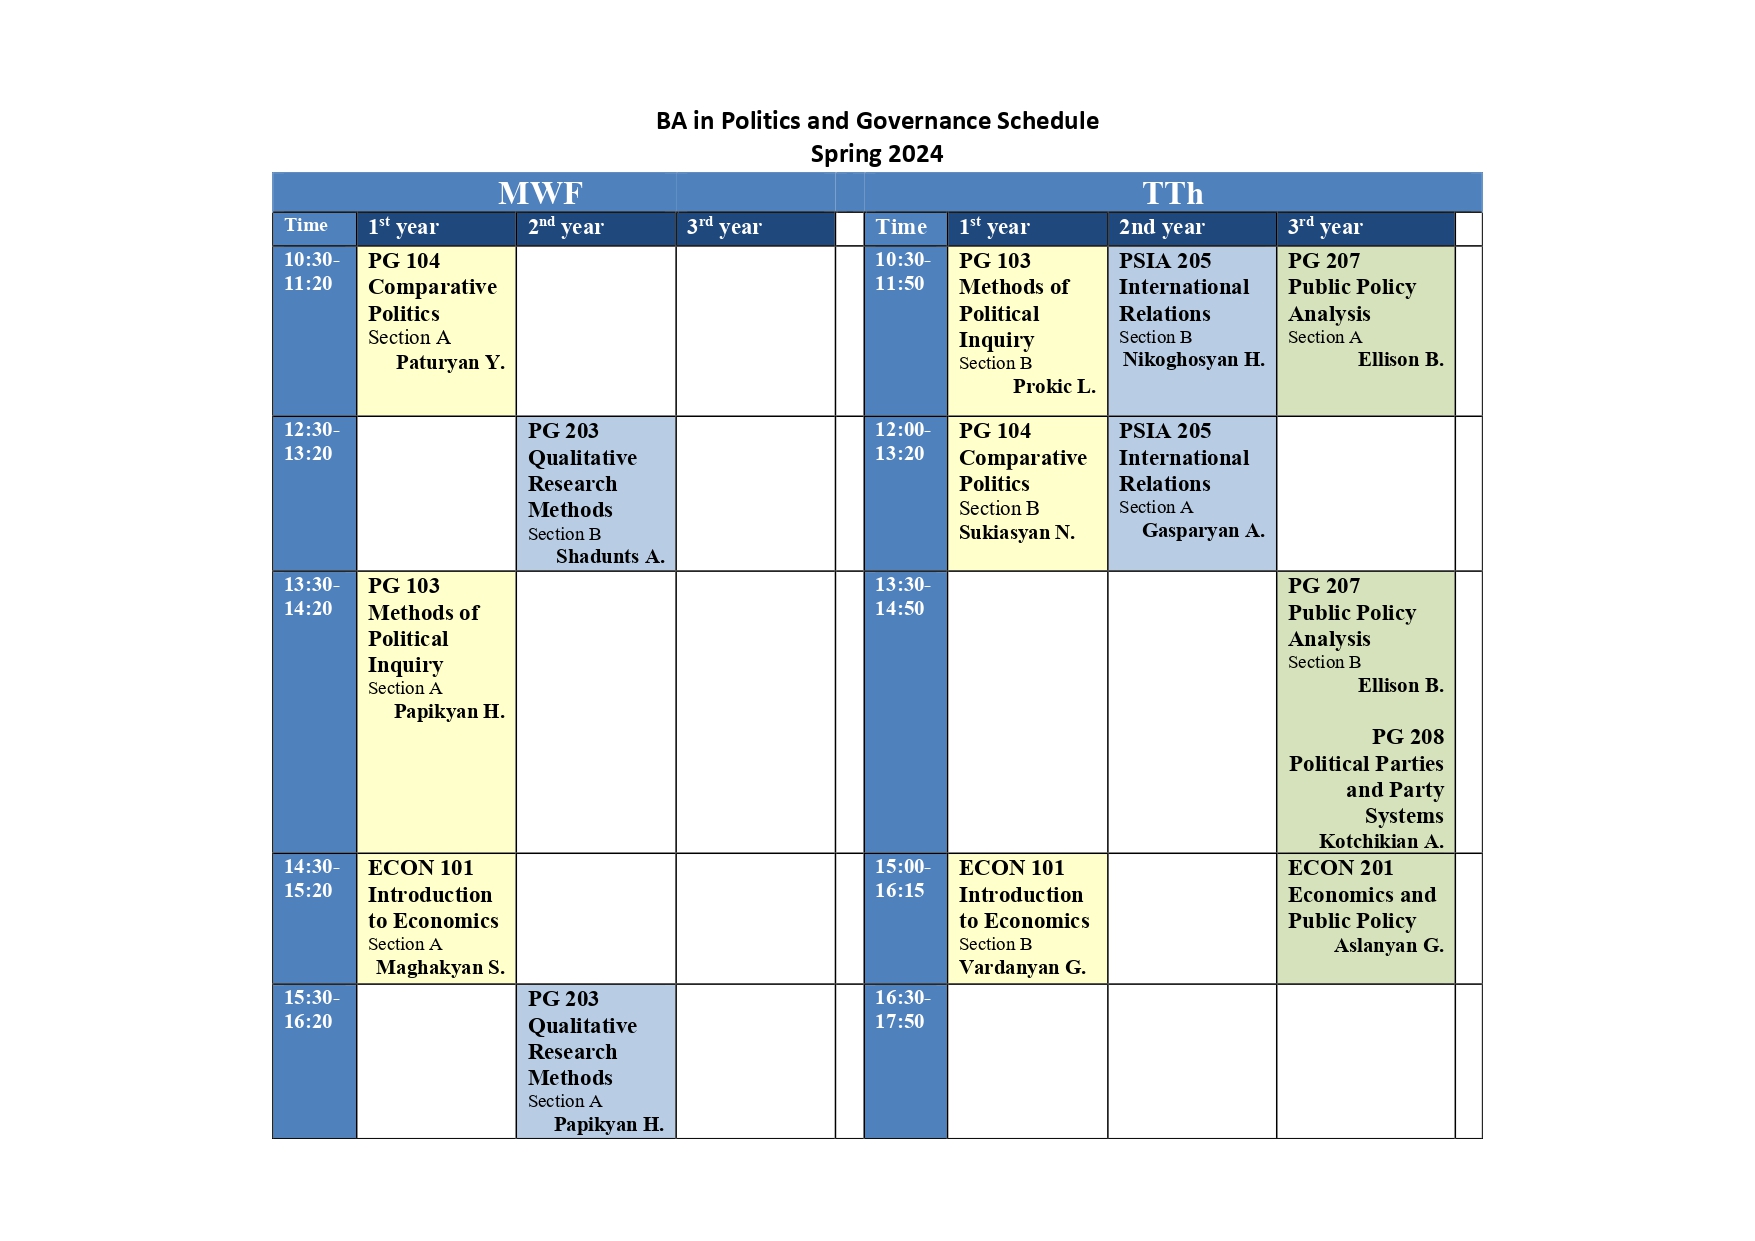 BAPG Schedule Spring 2024 BA Program in Politics & Governance